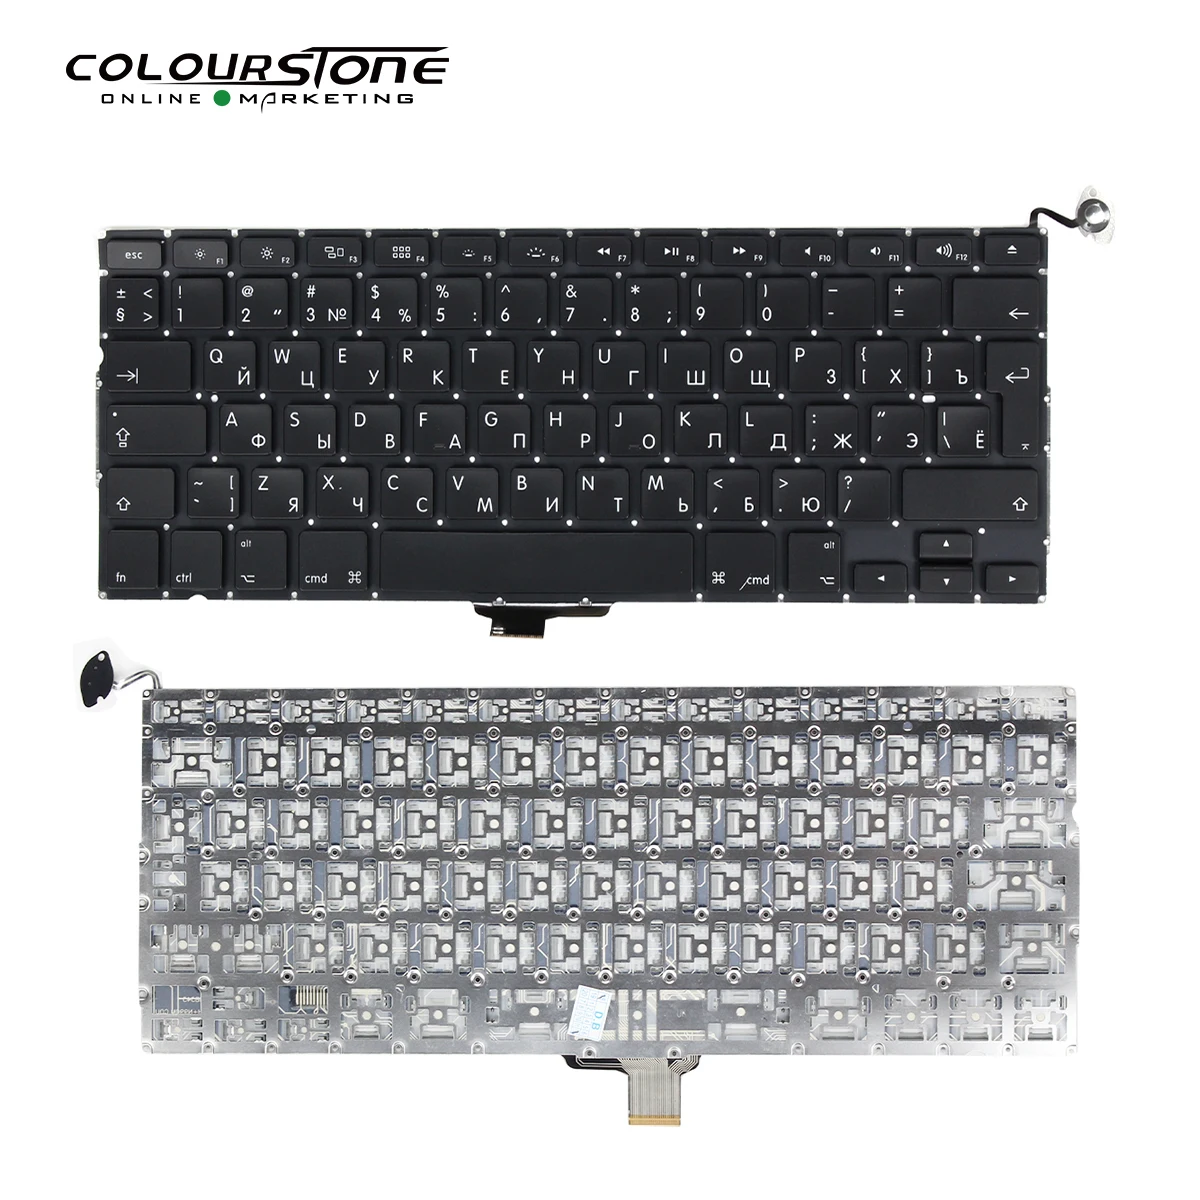 

New RU Keyboard RU For Macbook Pro 13.3 A1278 MC700 MB990 MC374 MB466 Russian Standard Keyboard With Big Enter Key